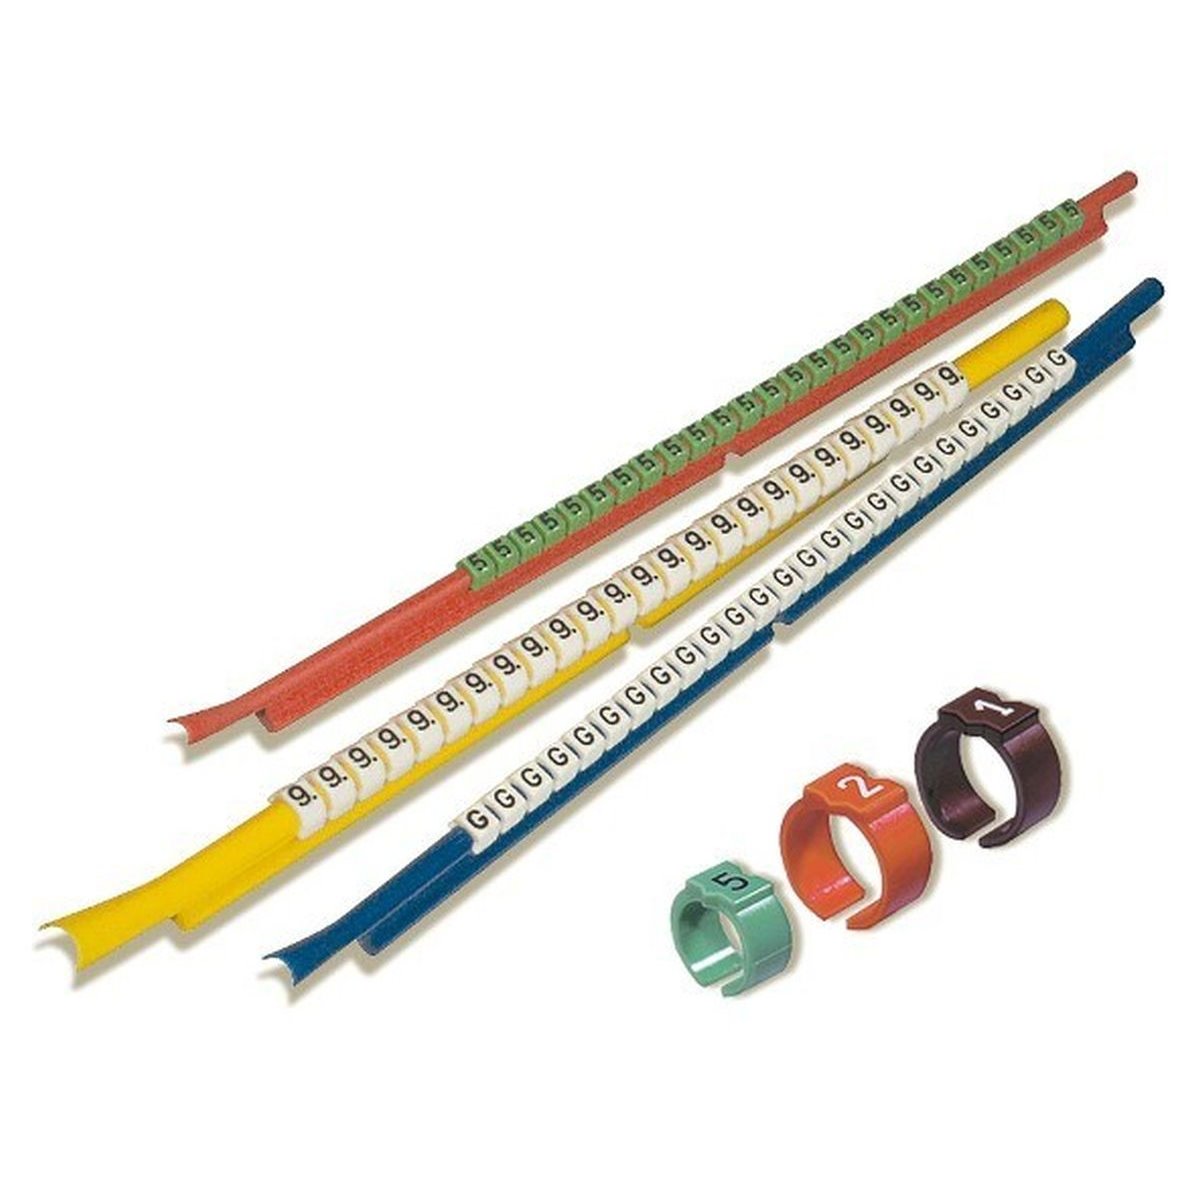 Cable marker PLIOSNAP+ PS-03-D-YE 300pcs. SES-Sterling